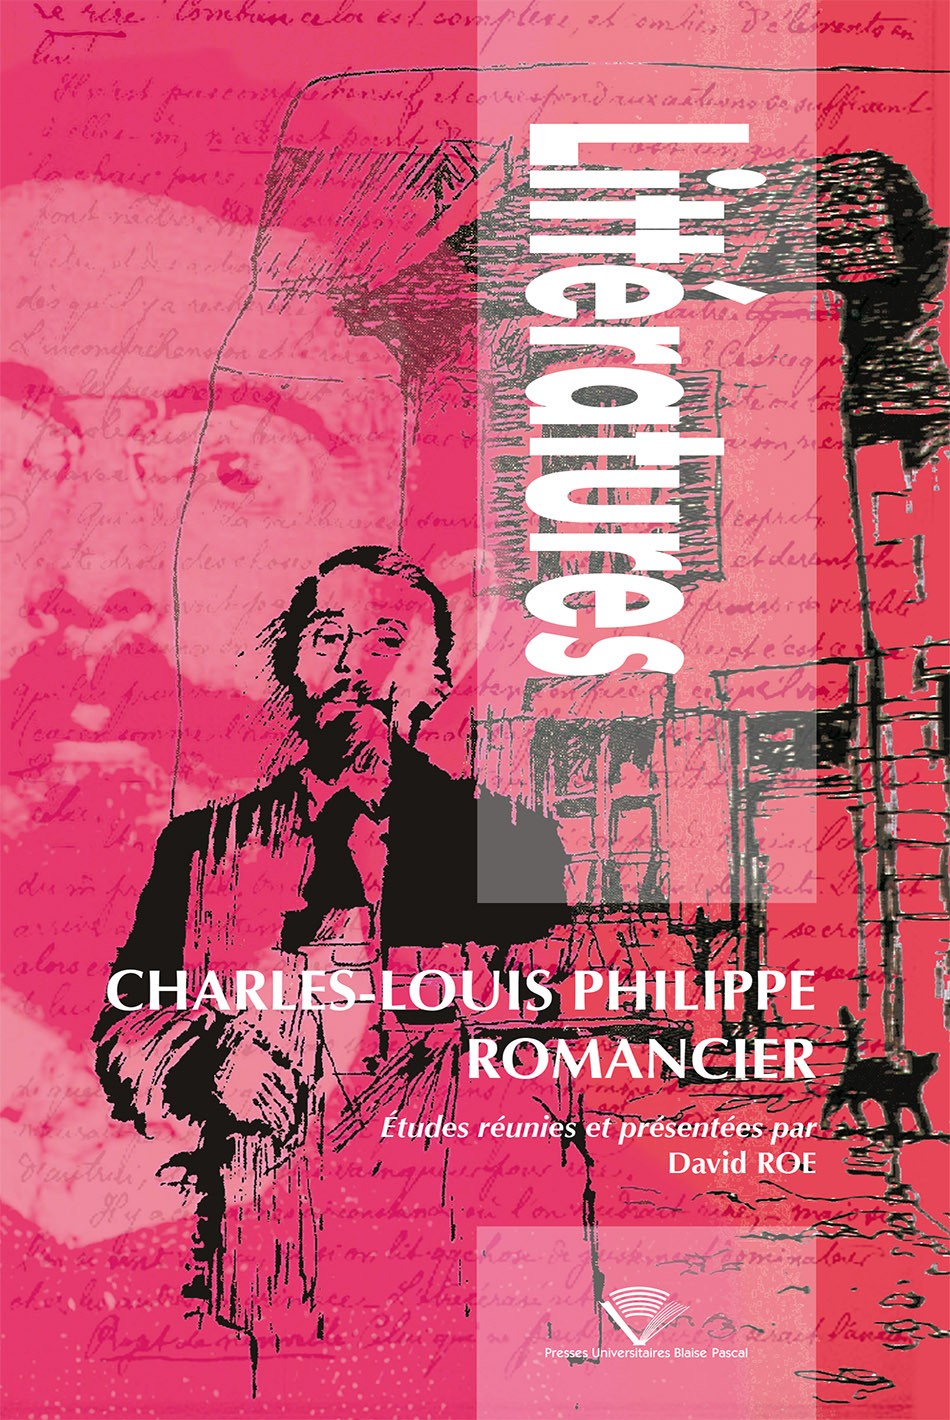 Charles-Louis Philippe romancier